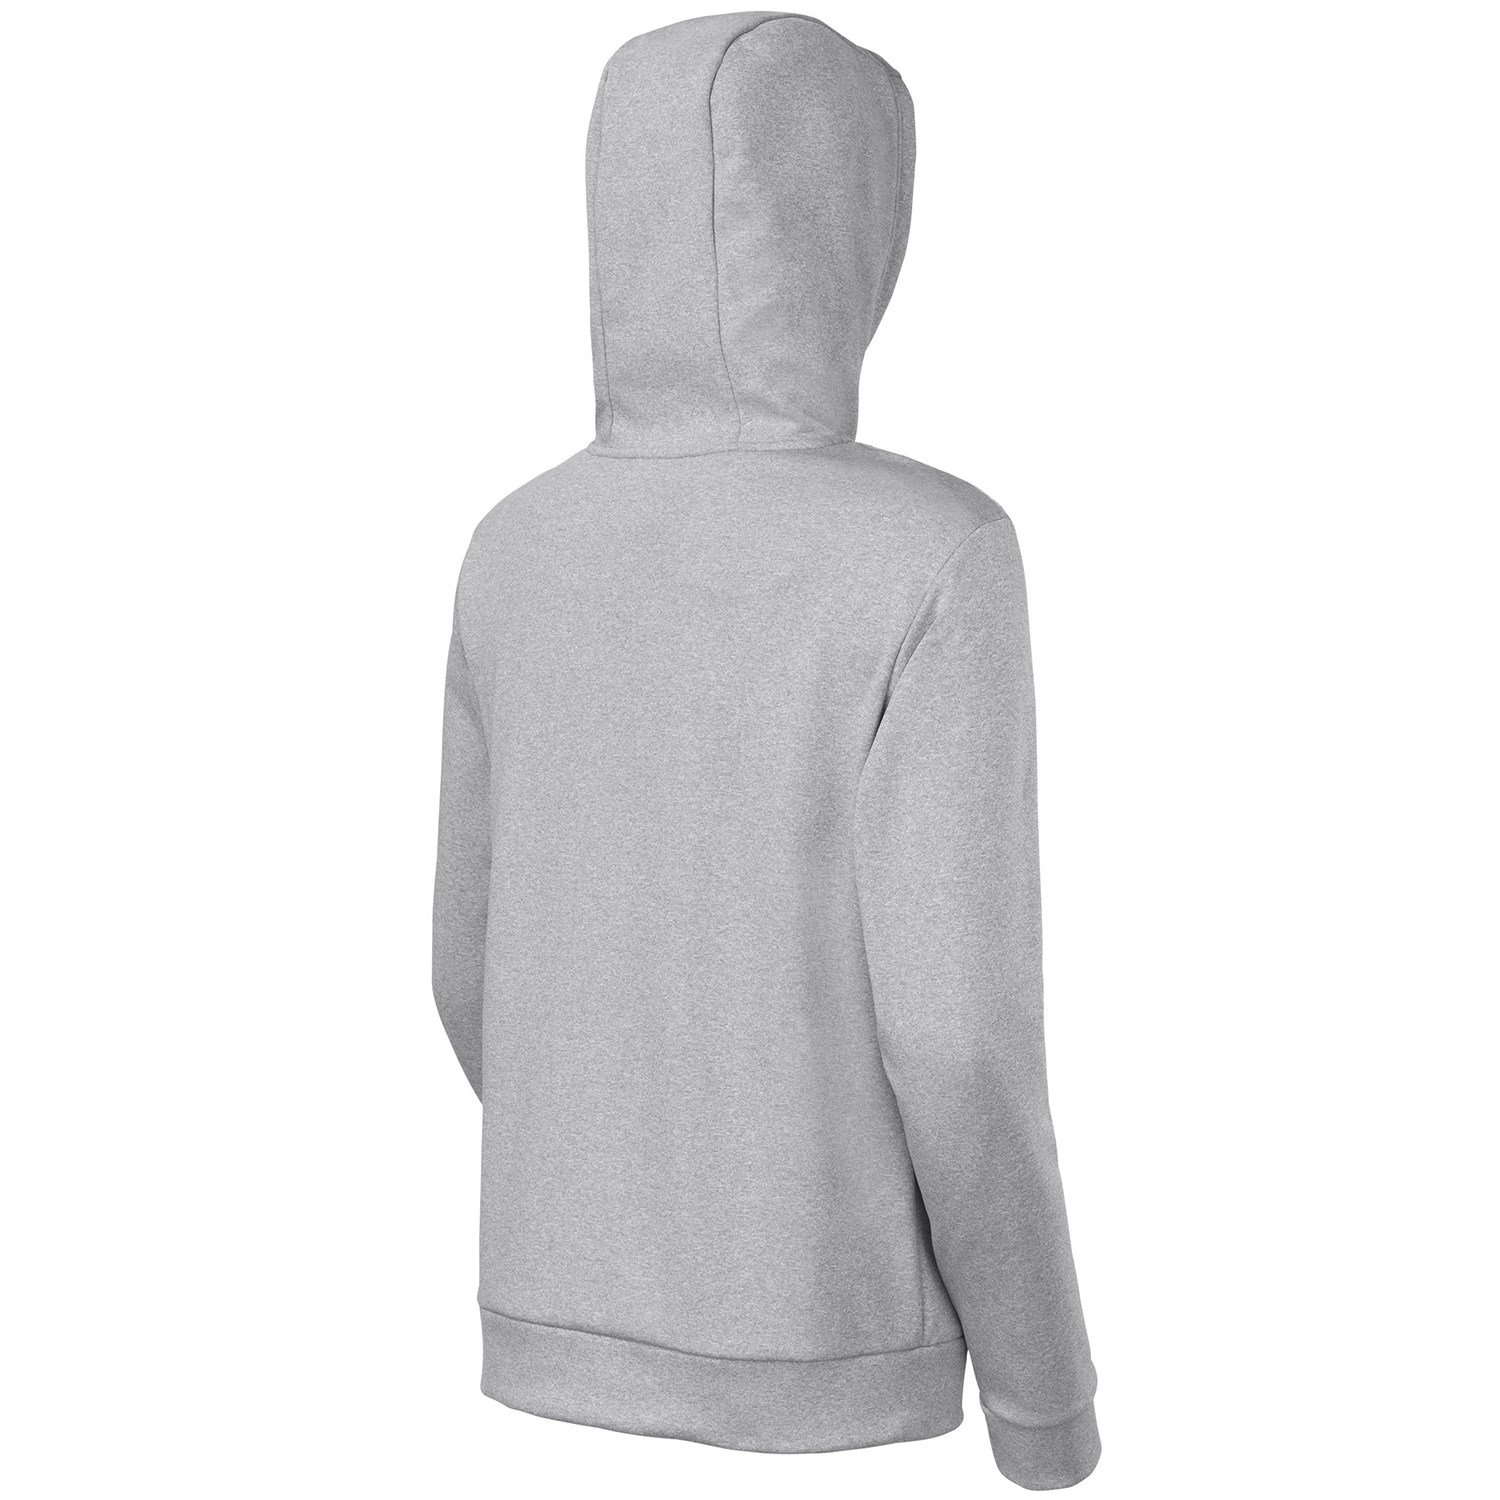 mountain athletics hoodie grey